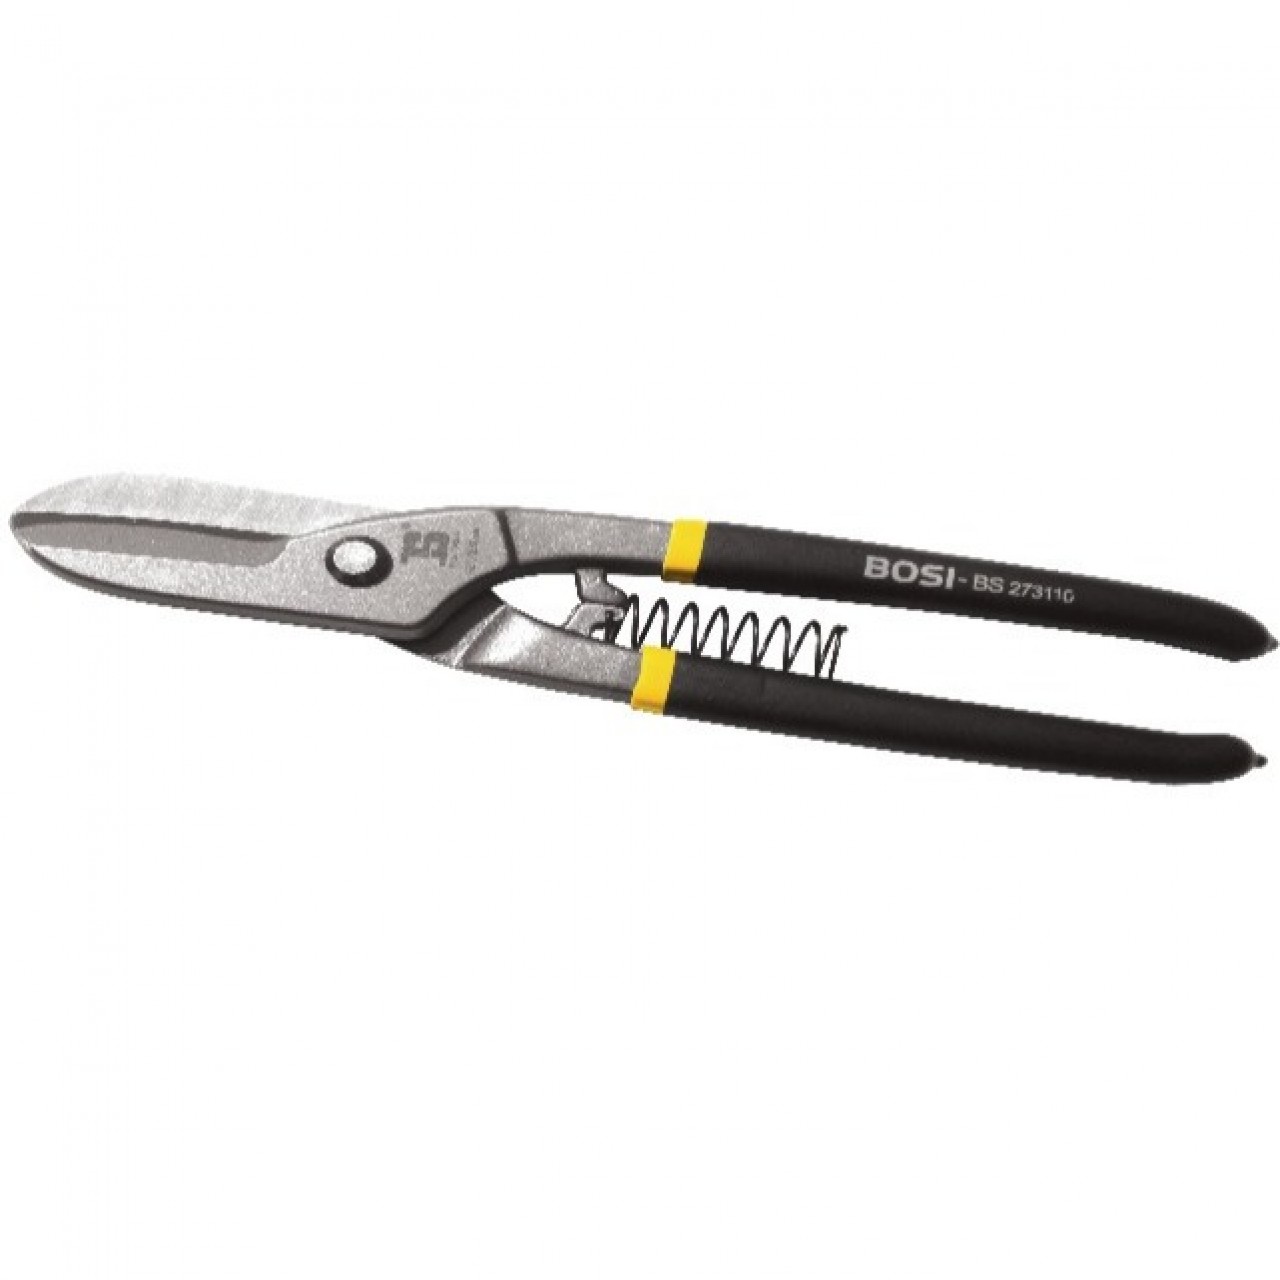 BOSI Steel Scissors BS273108 - 8"/200MM